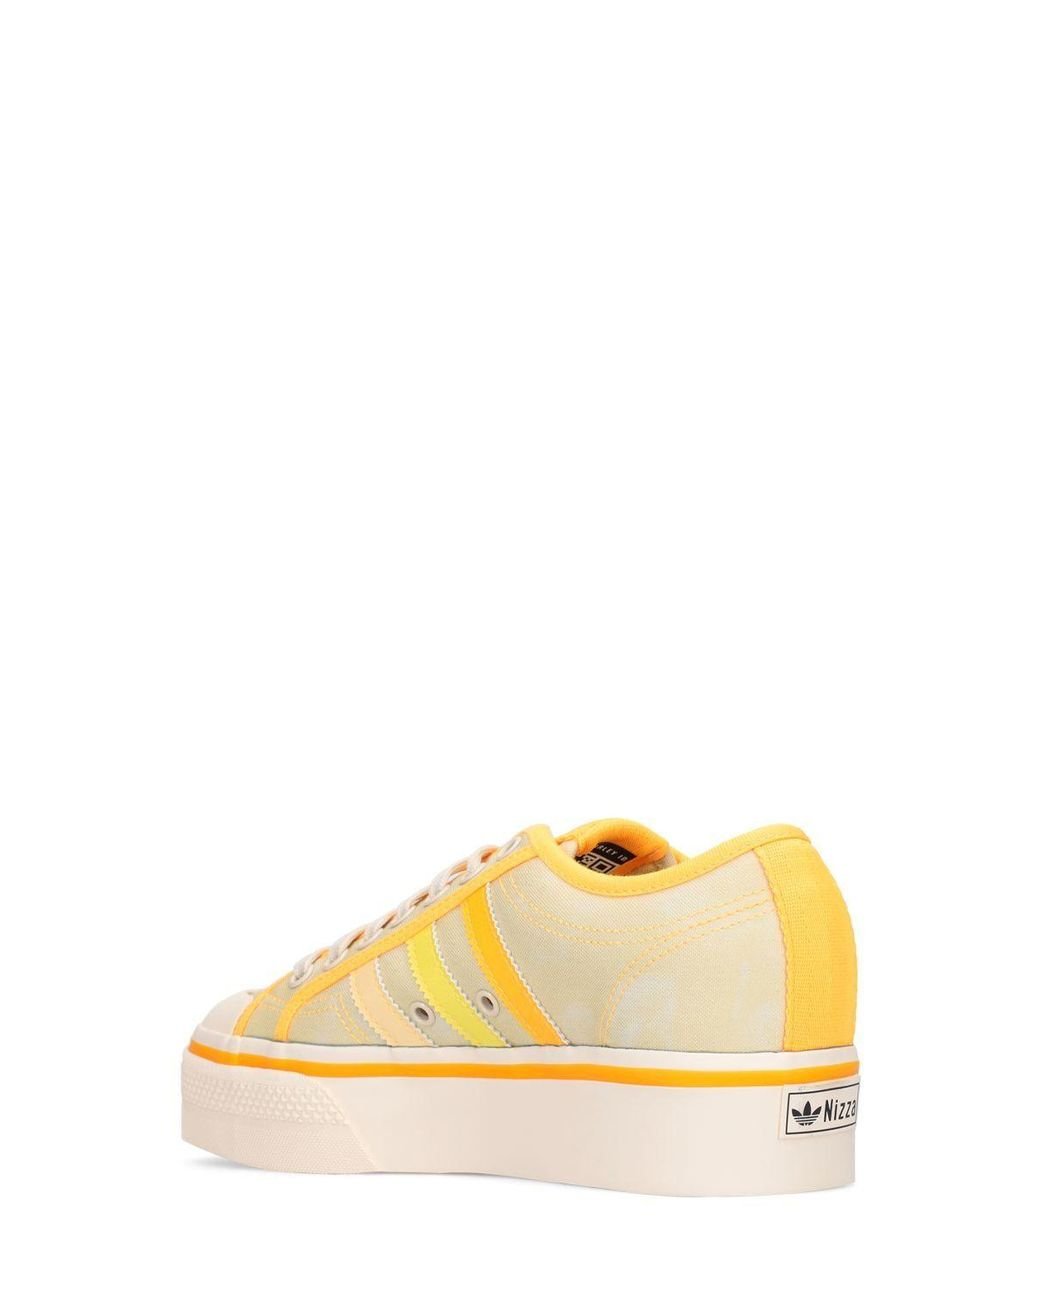 adidas Originals Nizza Platform Sneakers in Yellow | Lyst